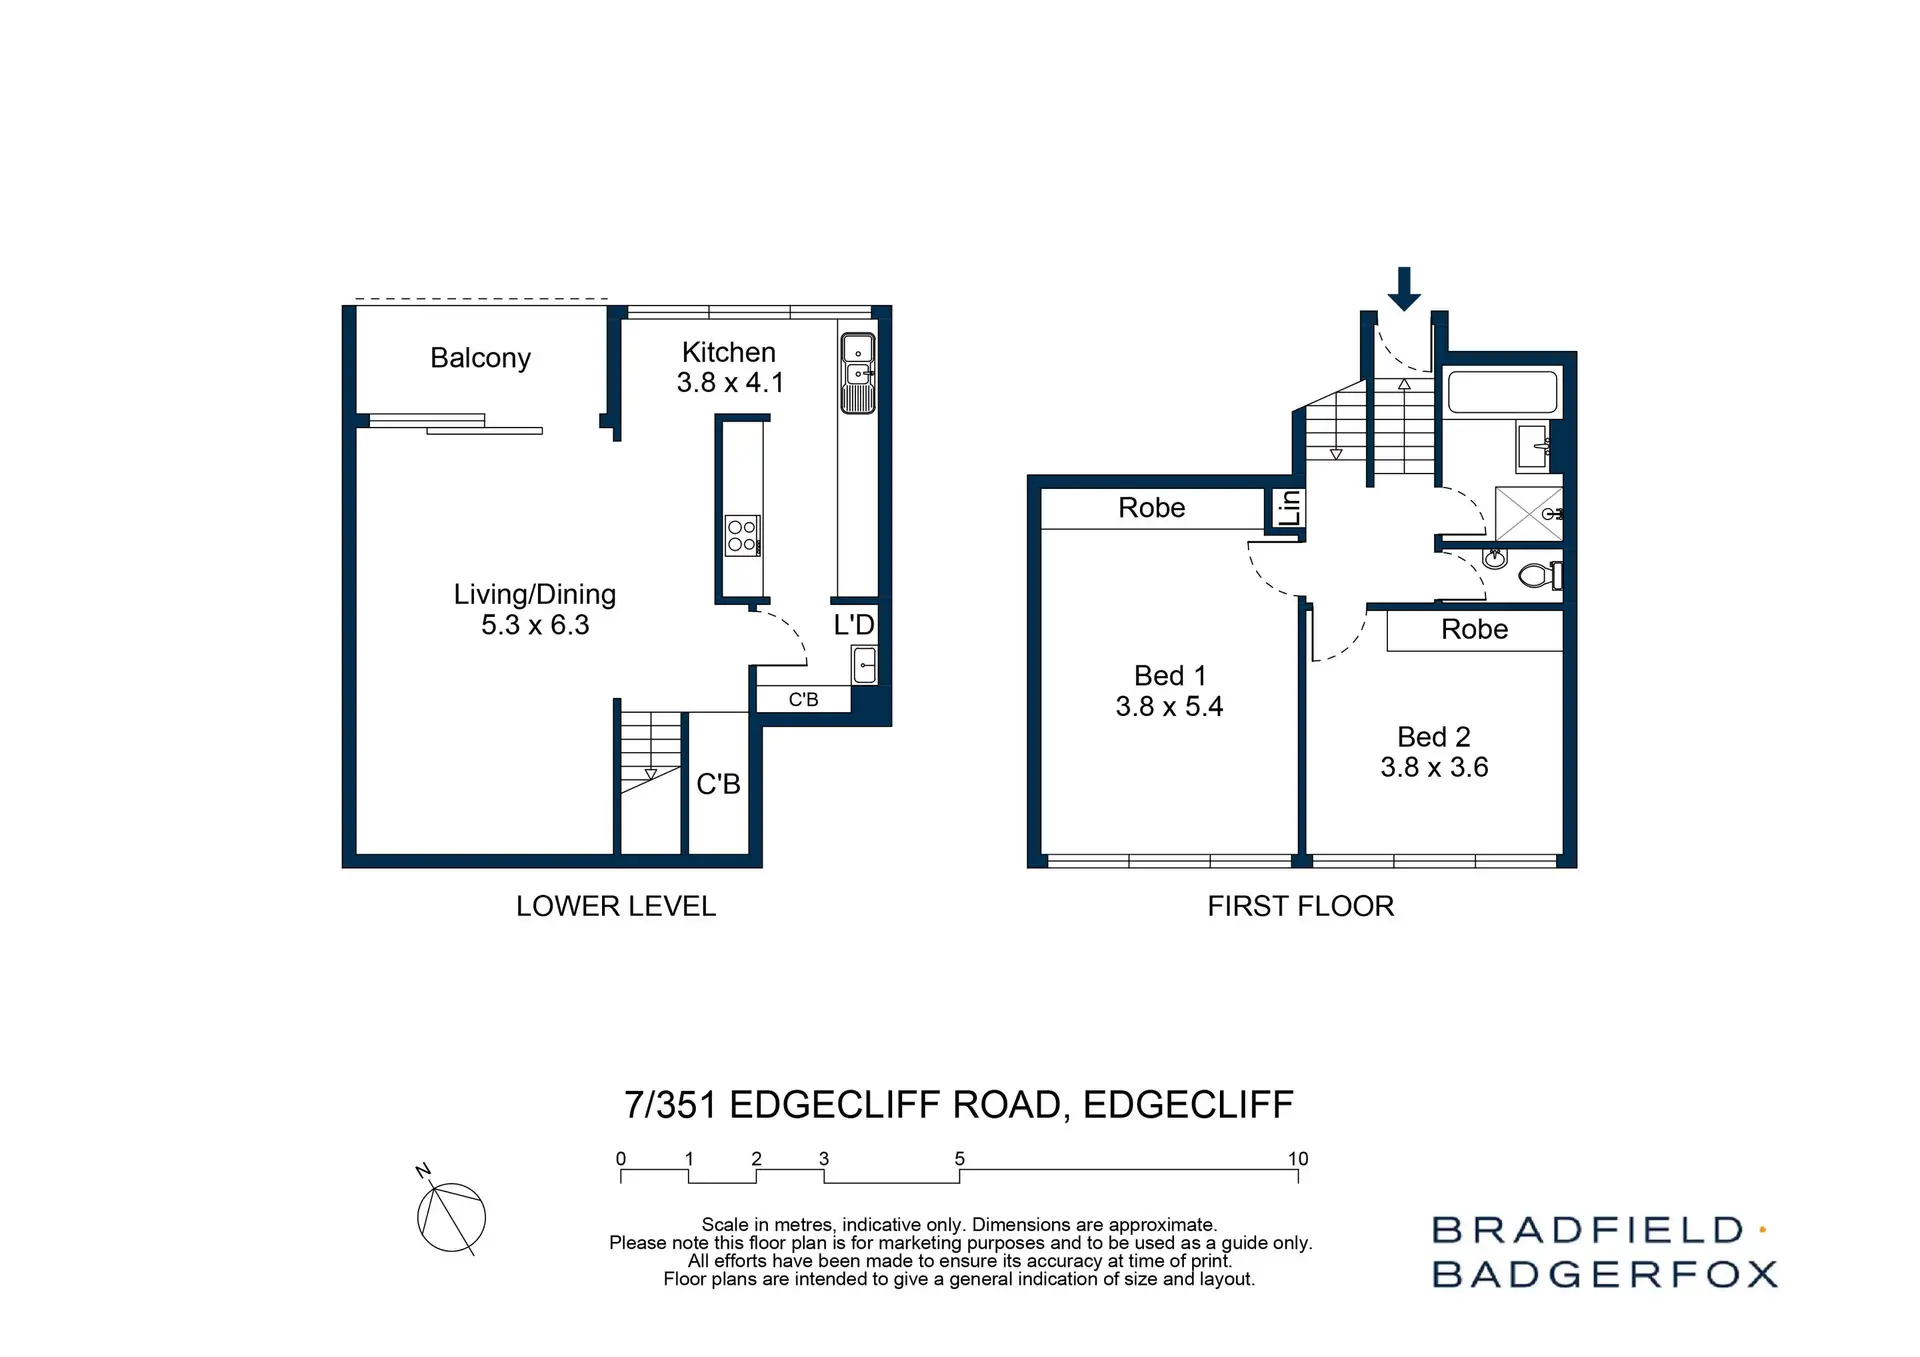 7/351 Edgecliff Road, Edgecliff Sold by Bradfield Badgerfox - image 1